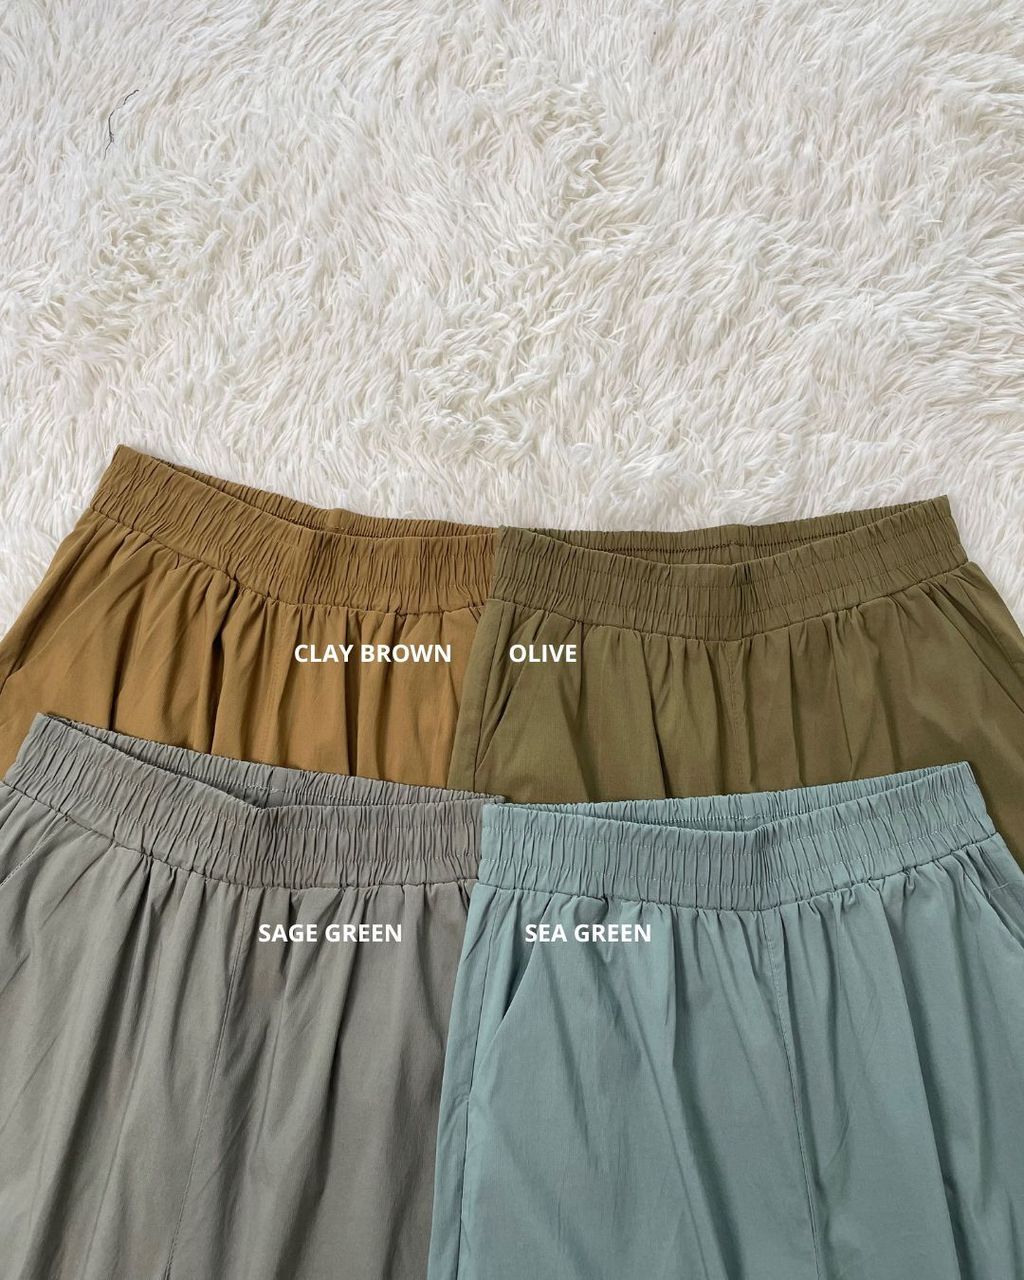 haura-wear-dixie-mix-cotton-skirt-high-waist-cotton-long-pants-seluar-muslimah-seluar-perempuan-palazzo-pants-sluar-skirt (5)